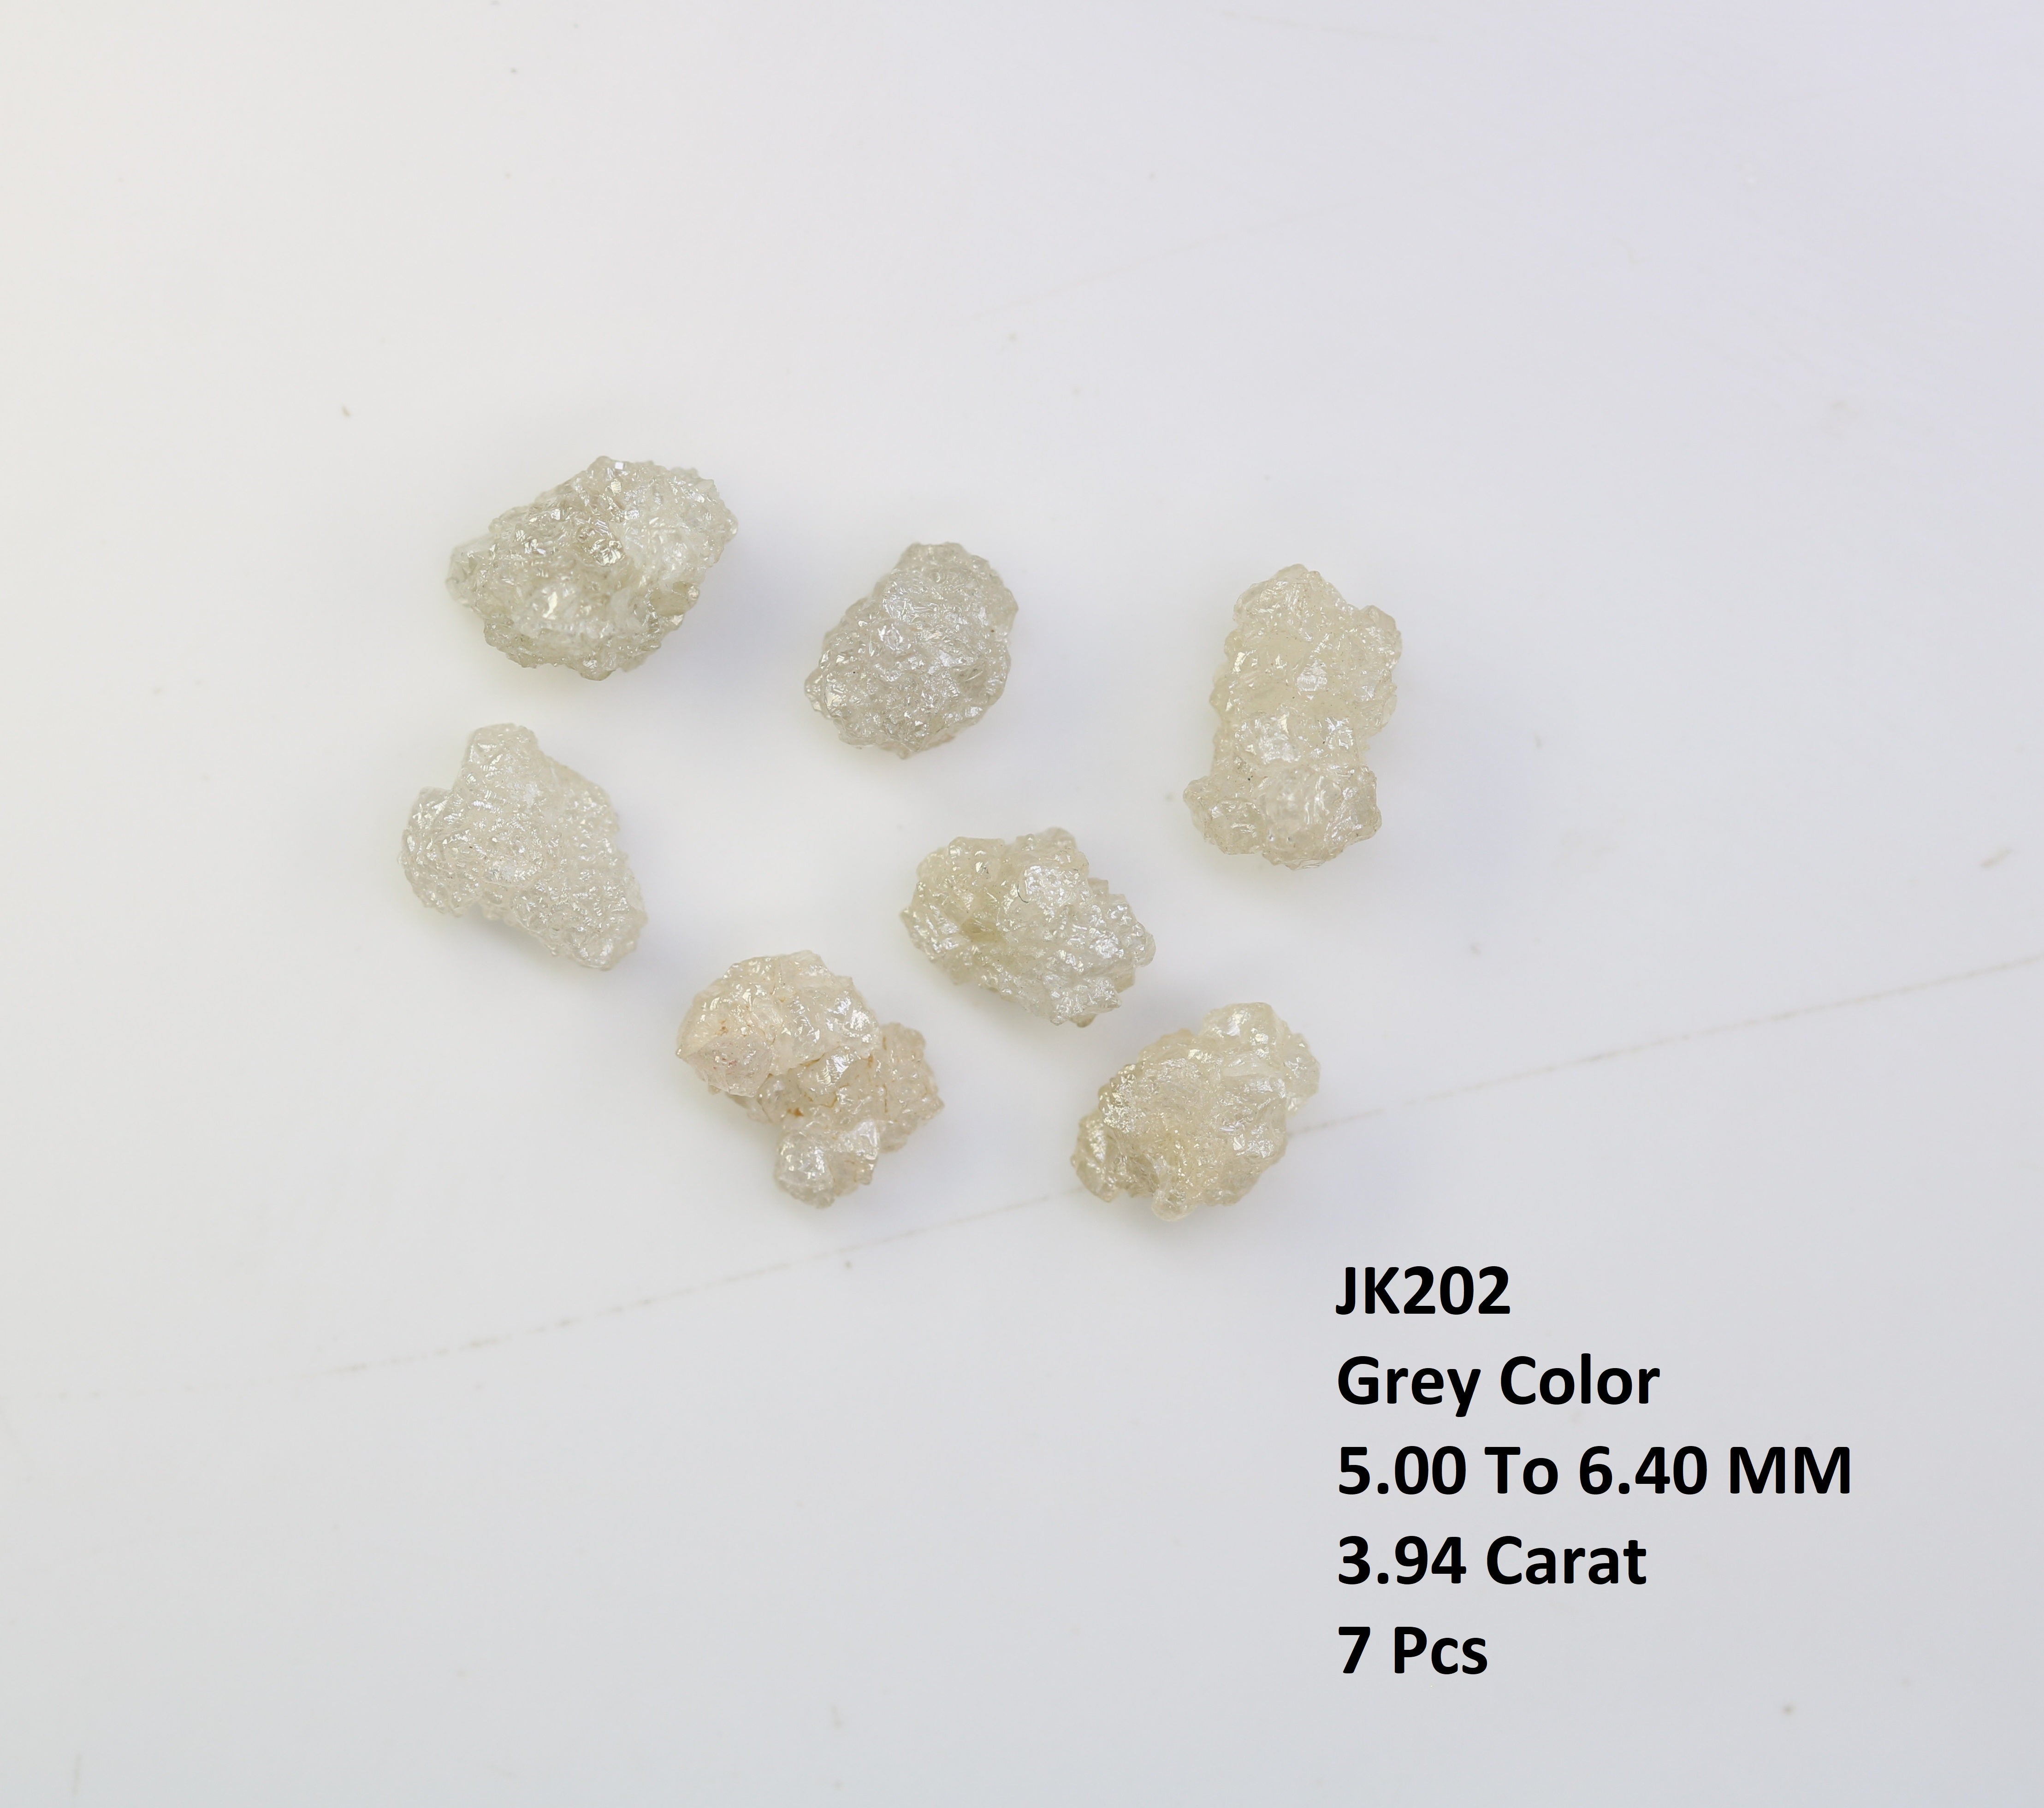 3.94 CT Raw White Grey Rough Irregular Cut Diamond For Engagement Ring